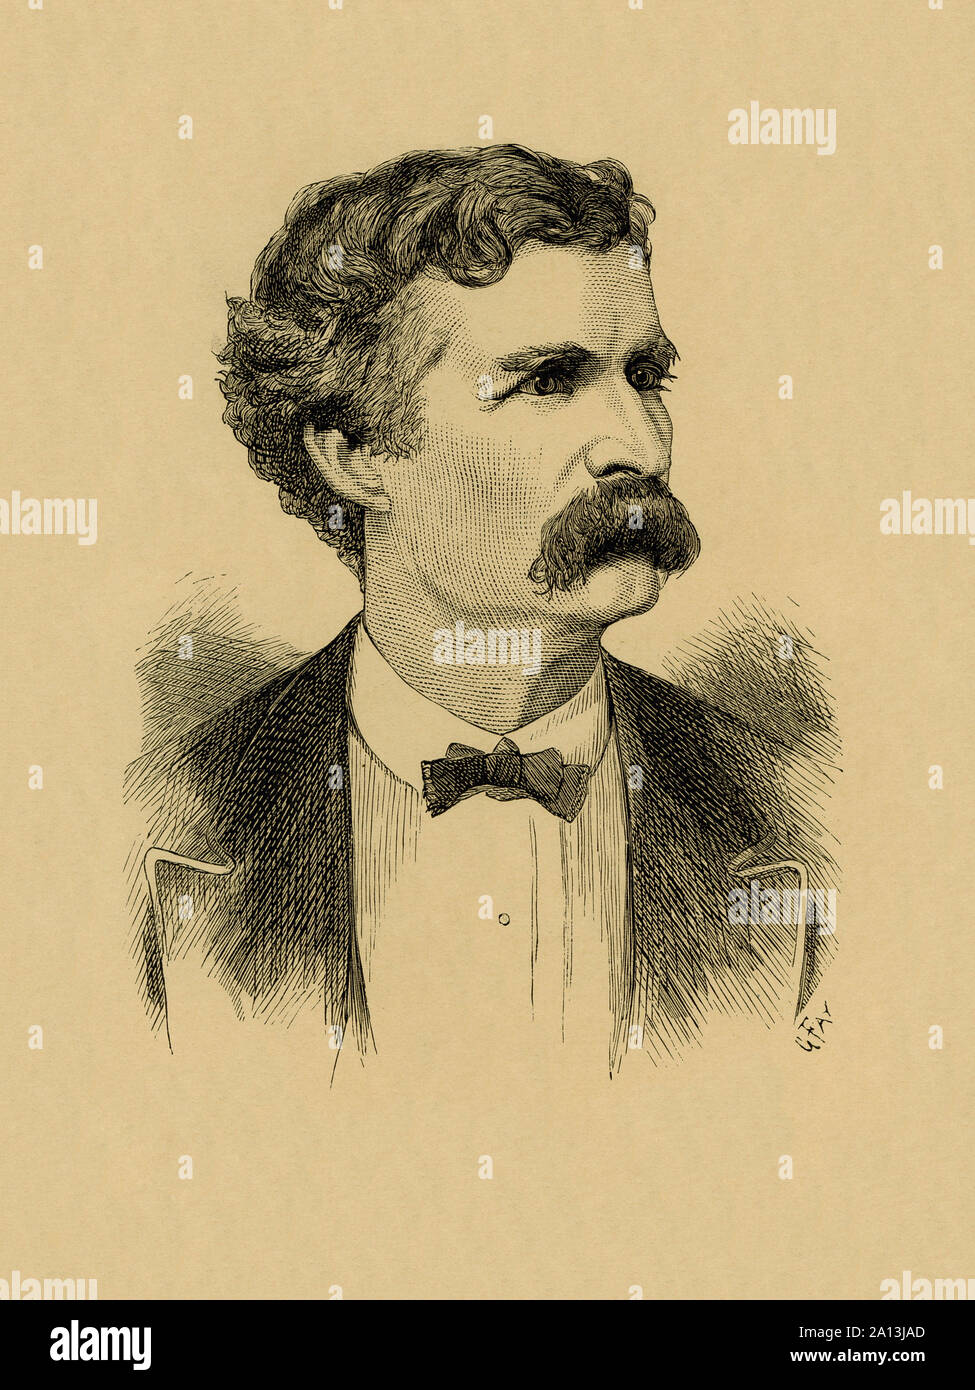 An engraved portrait print of Mark Twain. Stock Photo